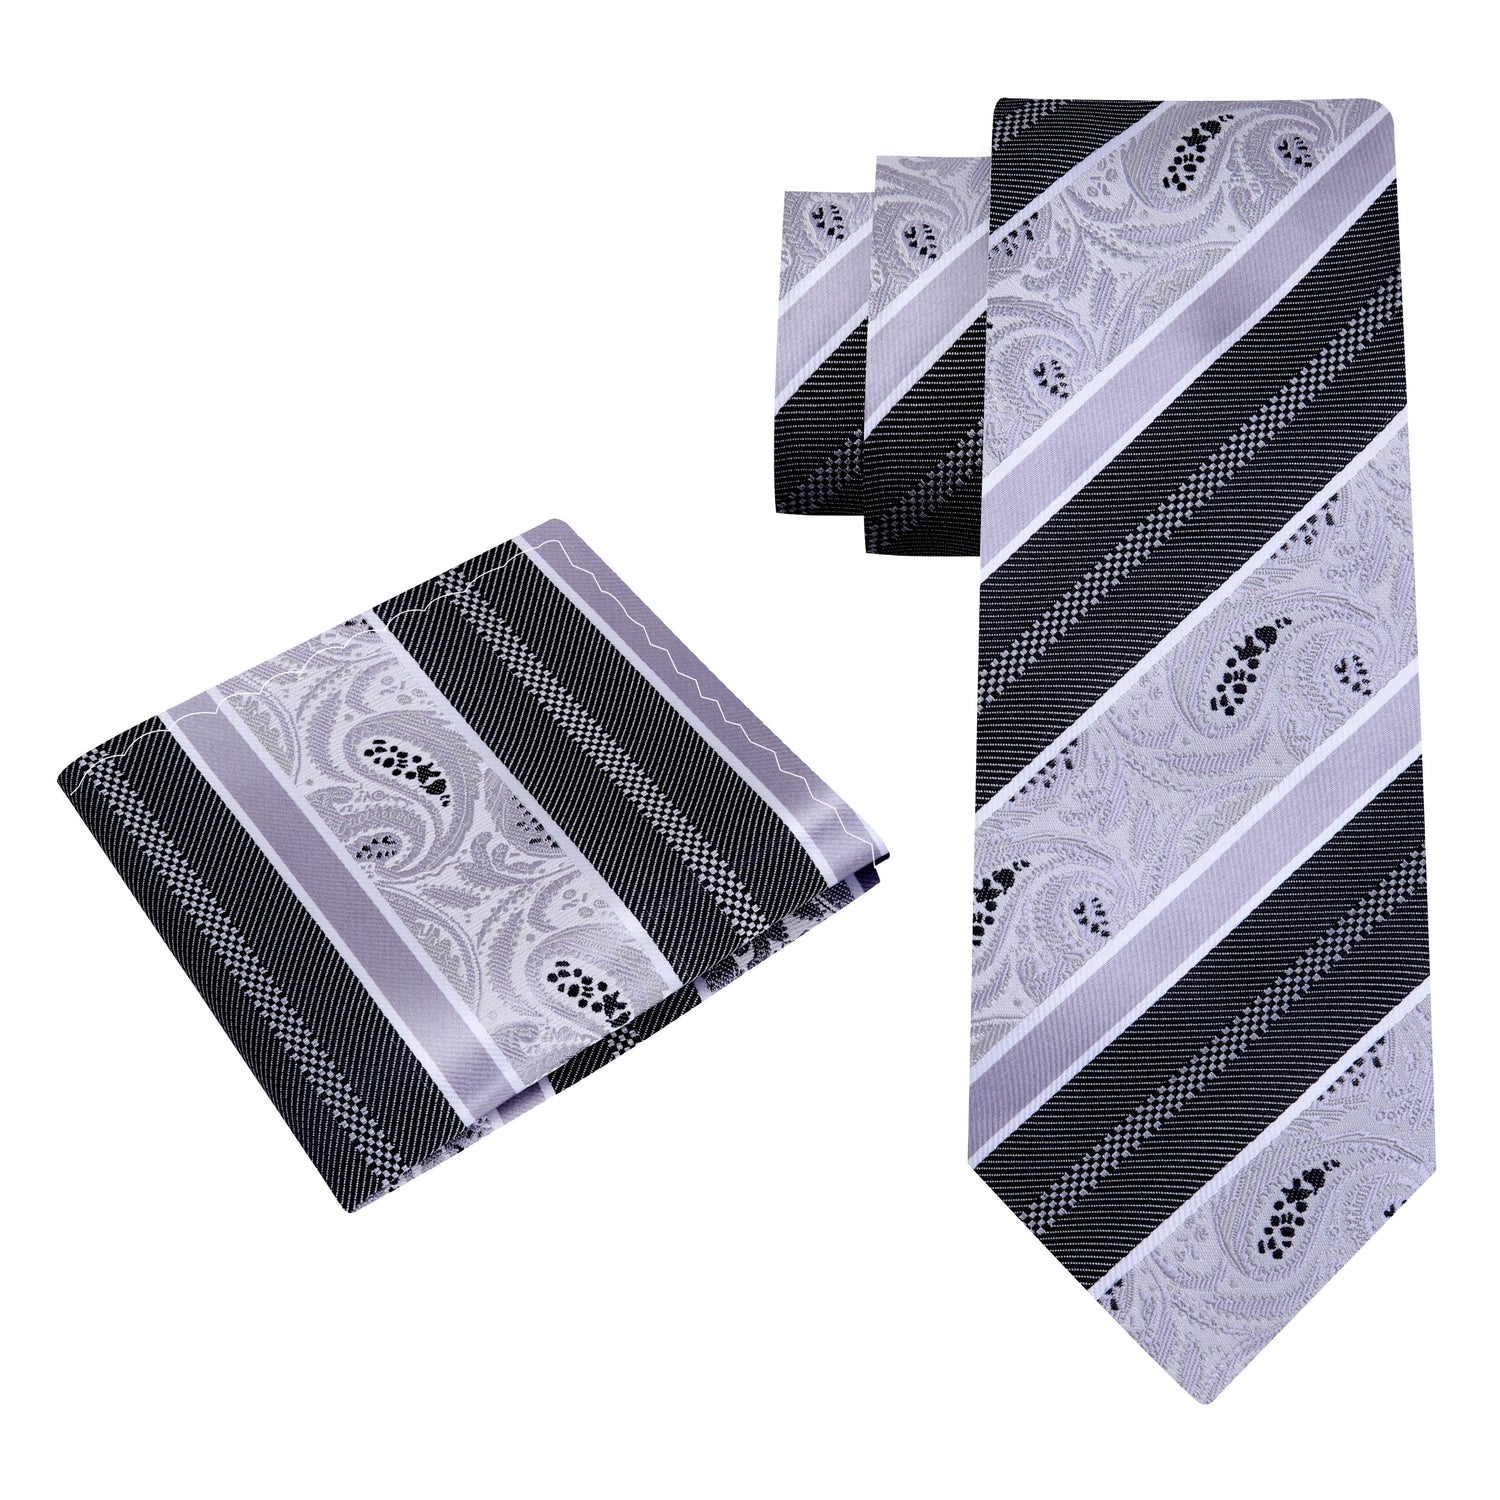 Alt View: Grey, White, Black Paisley Tie and Pocket Square